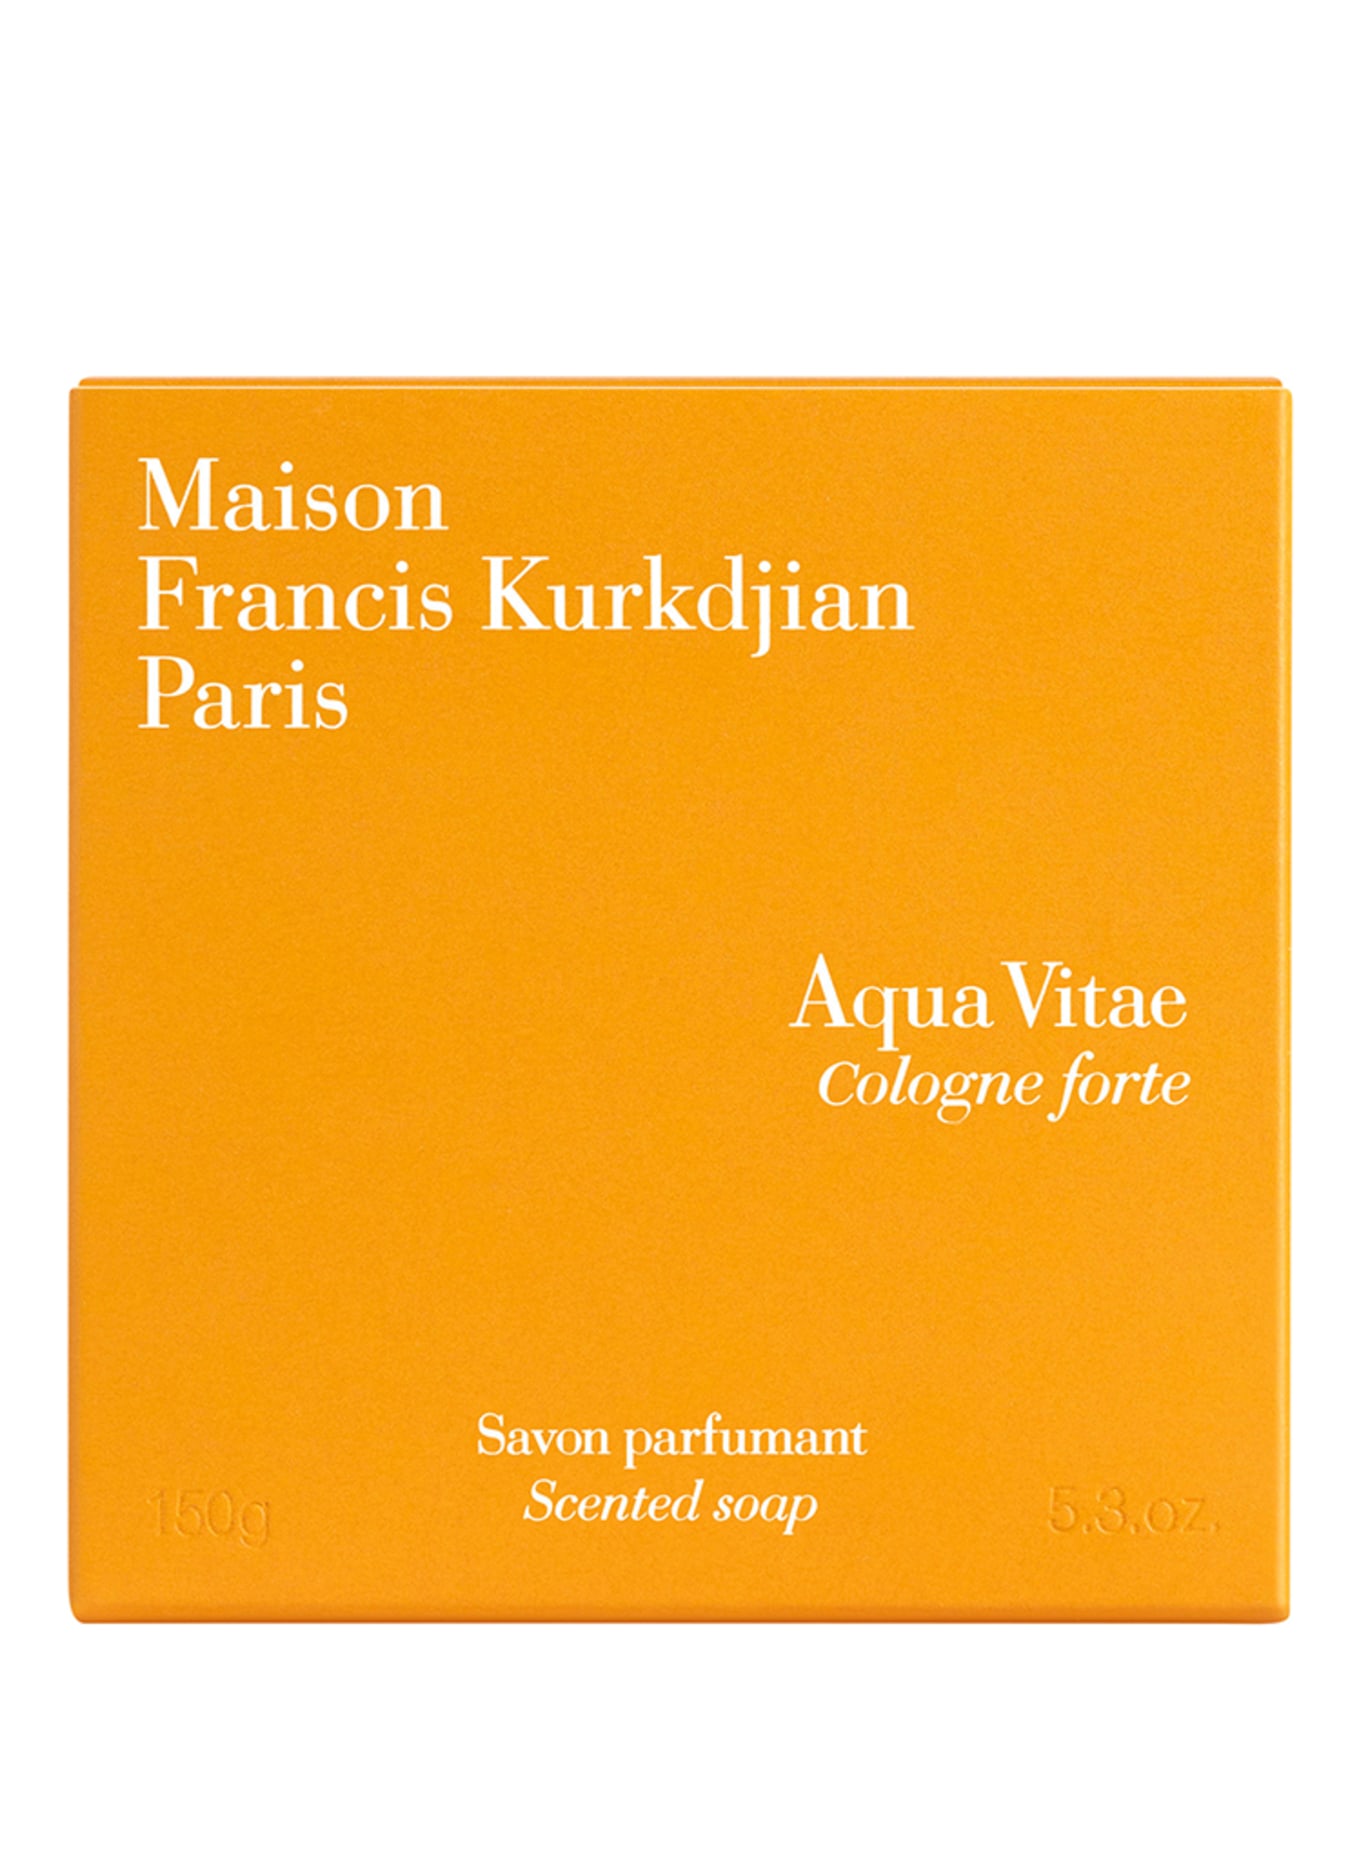 Maison Francis Kurkdjian Paris AQUA VITAE COLOGNE FORTE (Bild 2)